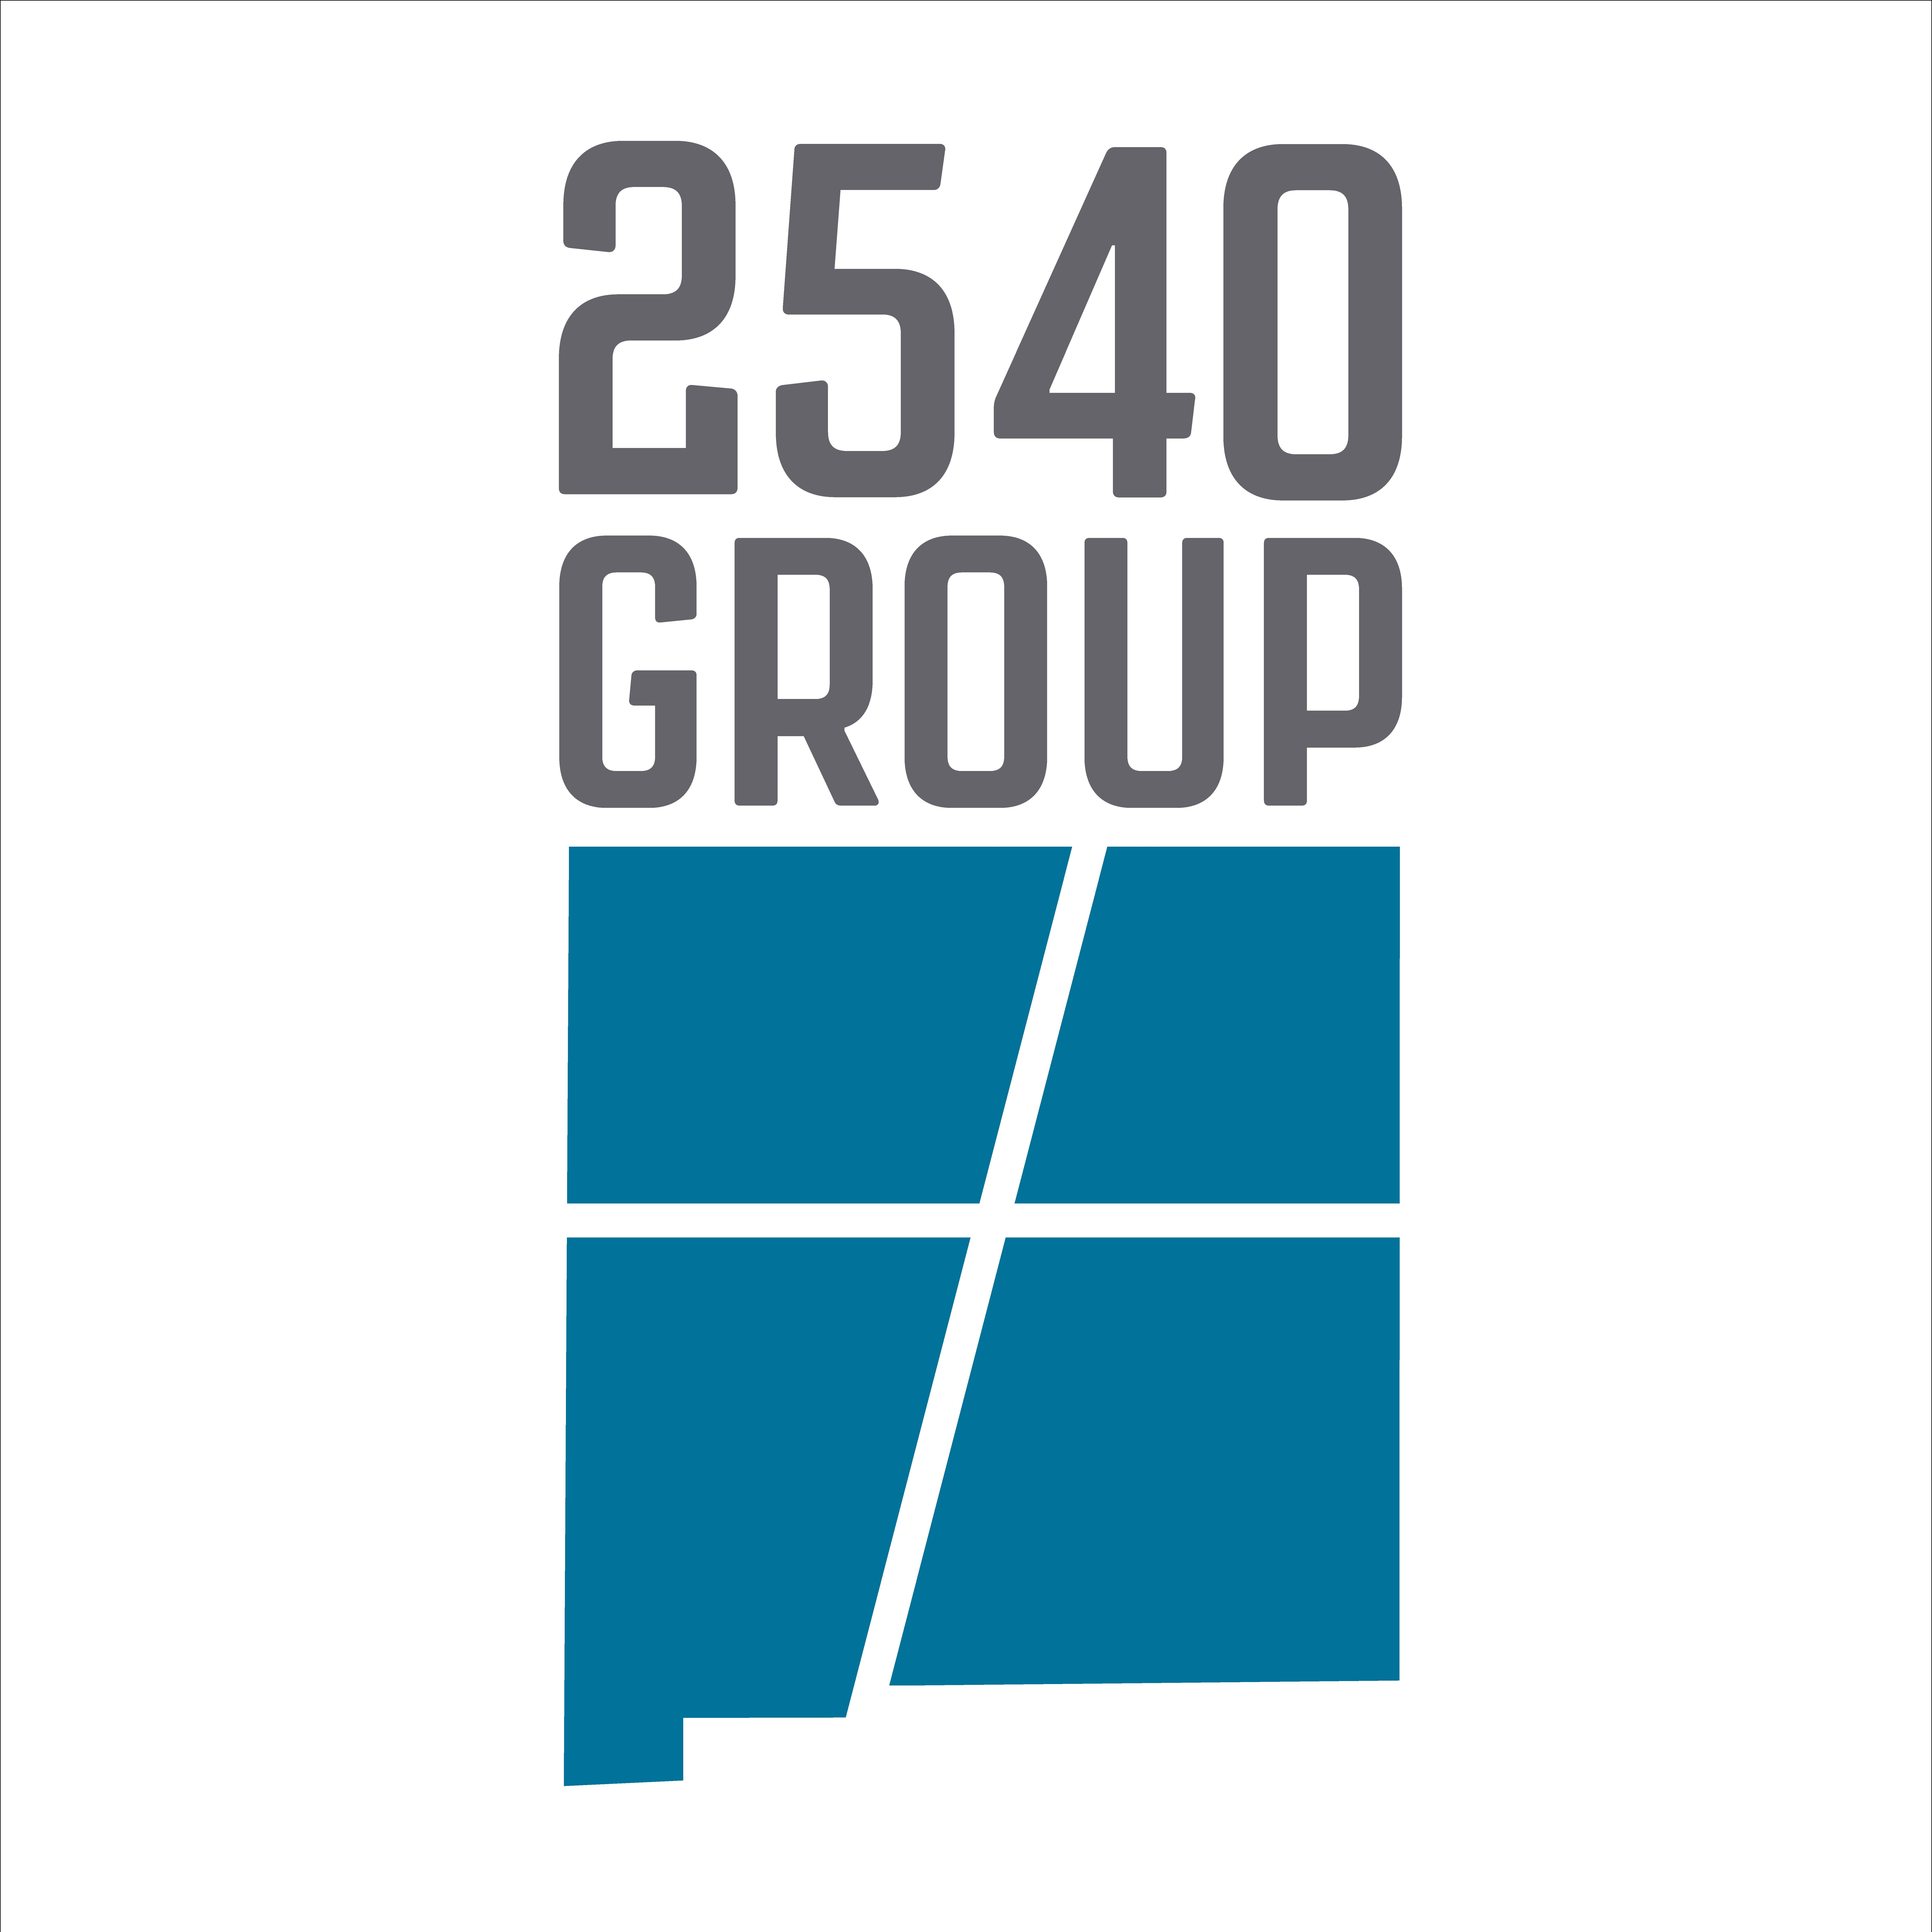 2540 Group